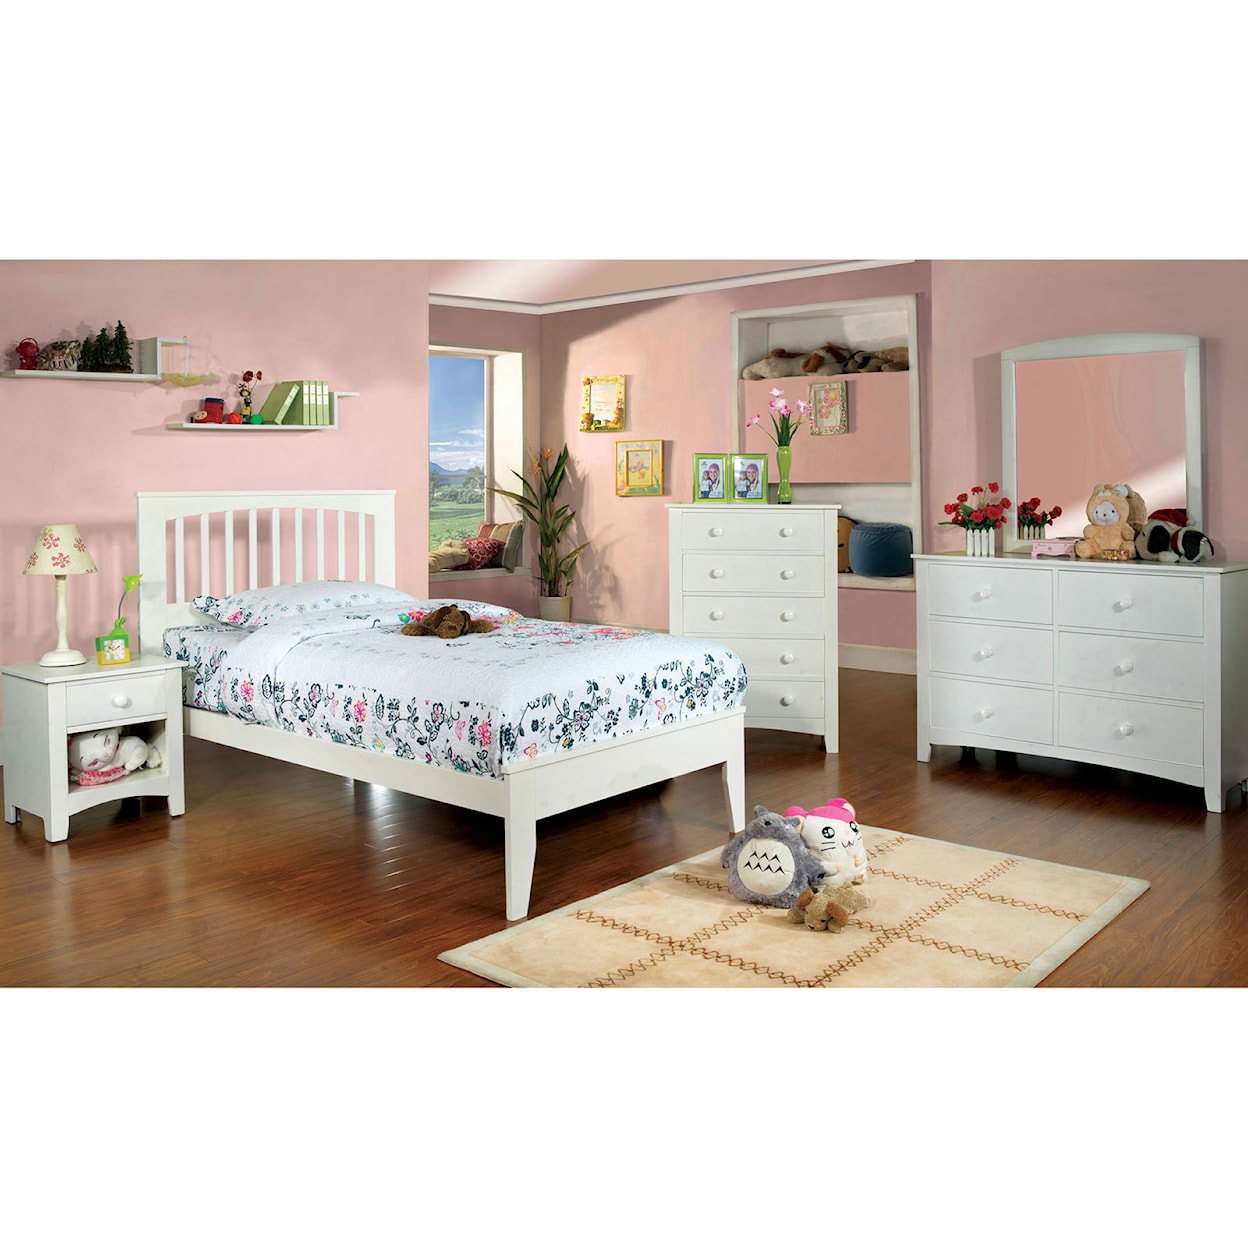 Furniture of America Pine Brook 4-Piece Full Bedroom Set